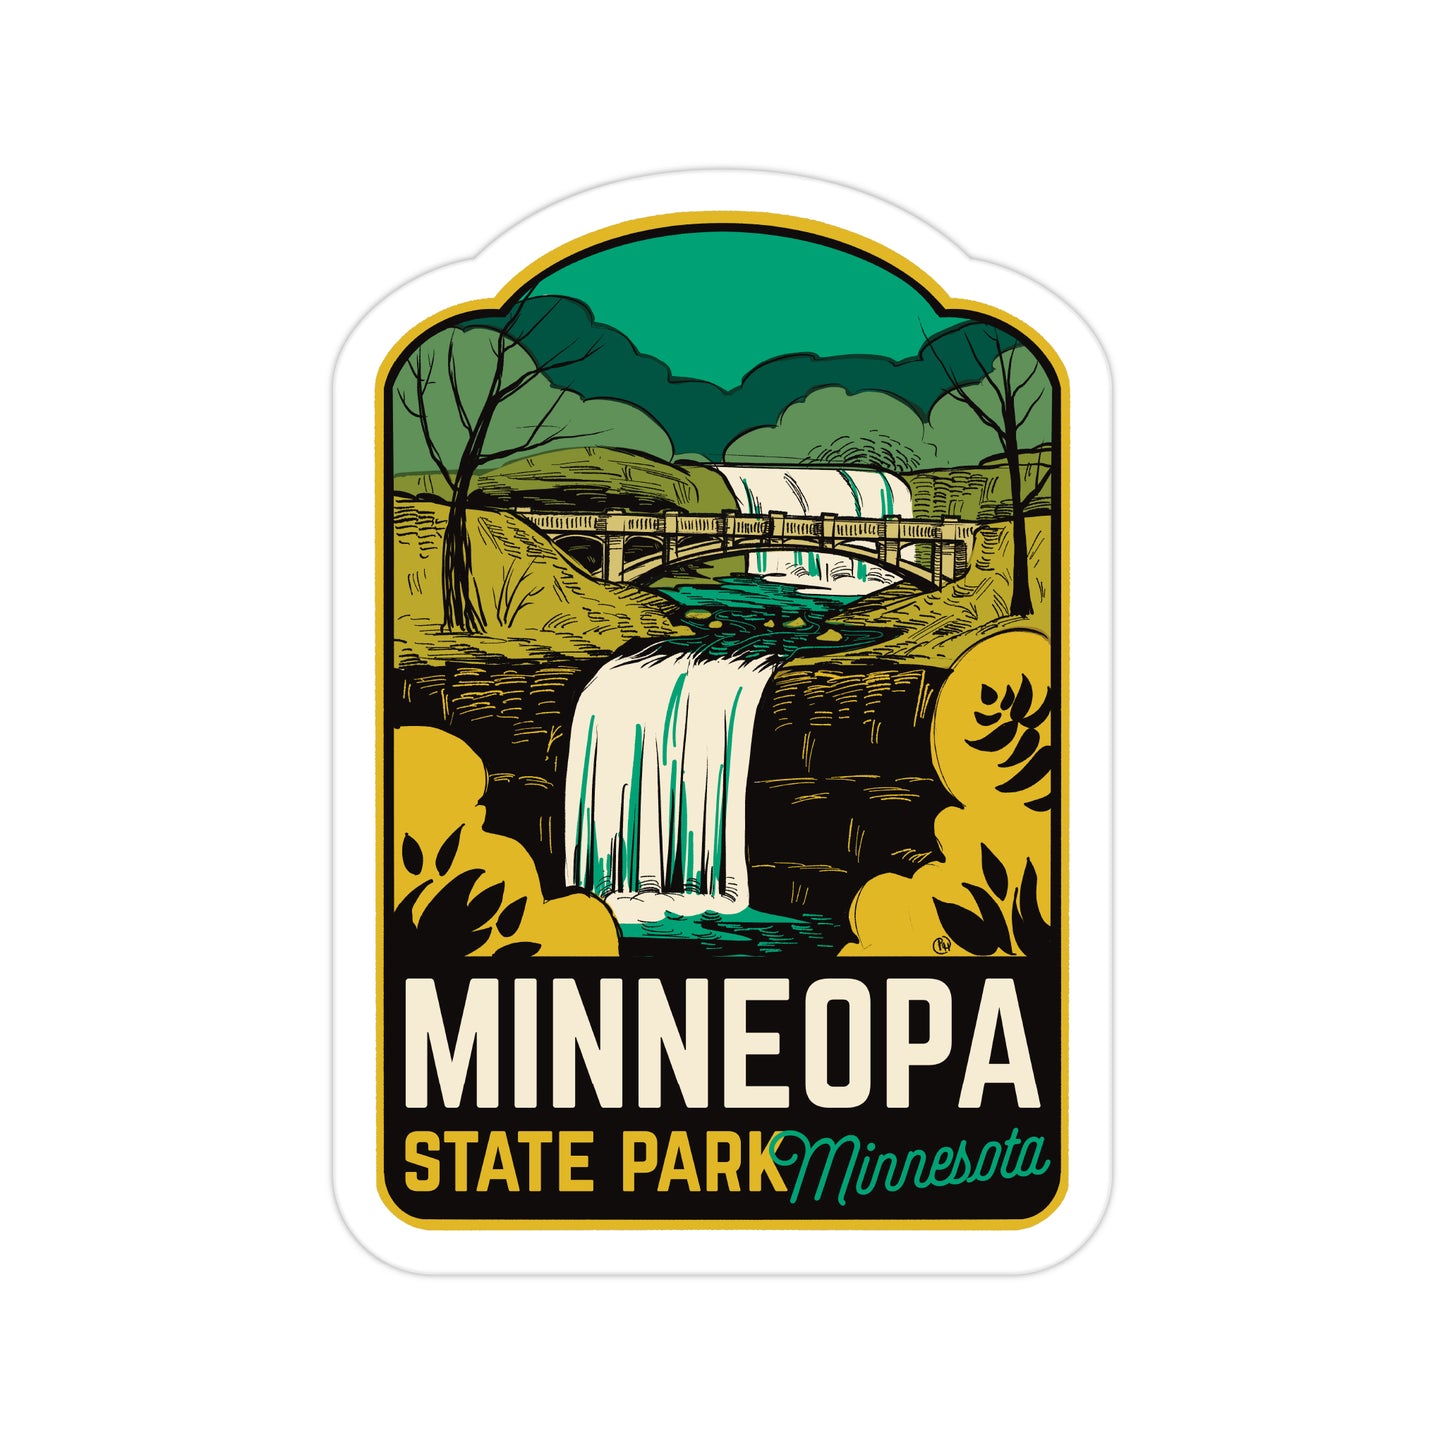 A sticker of Minneopa State Park